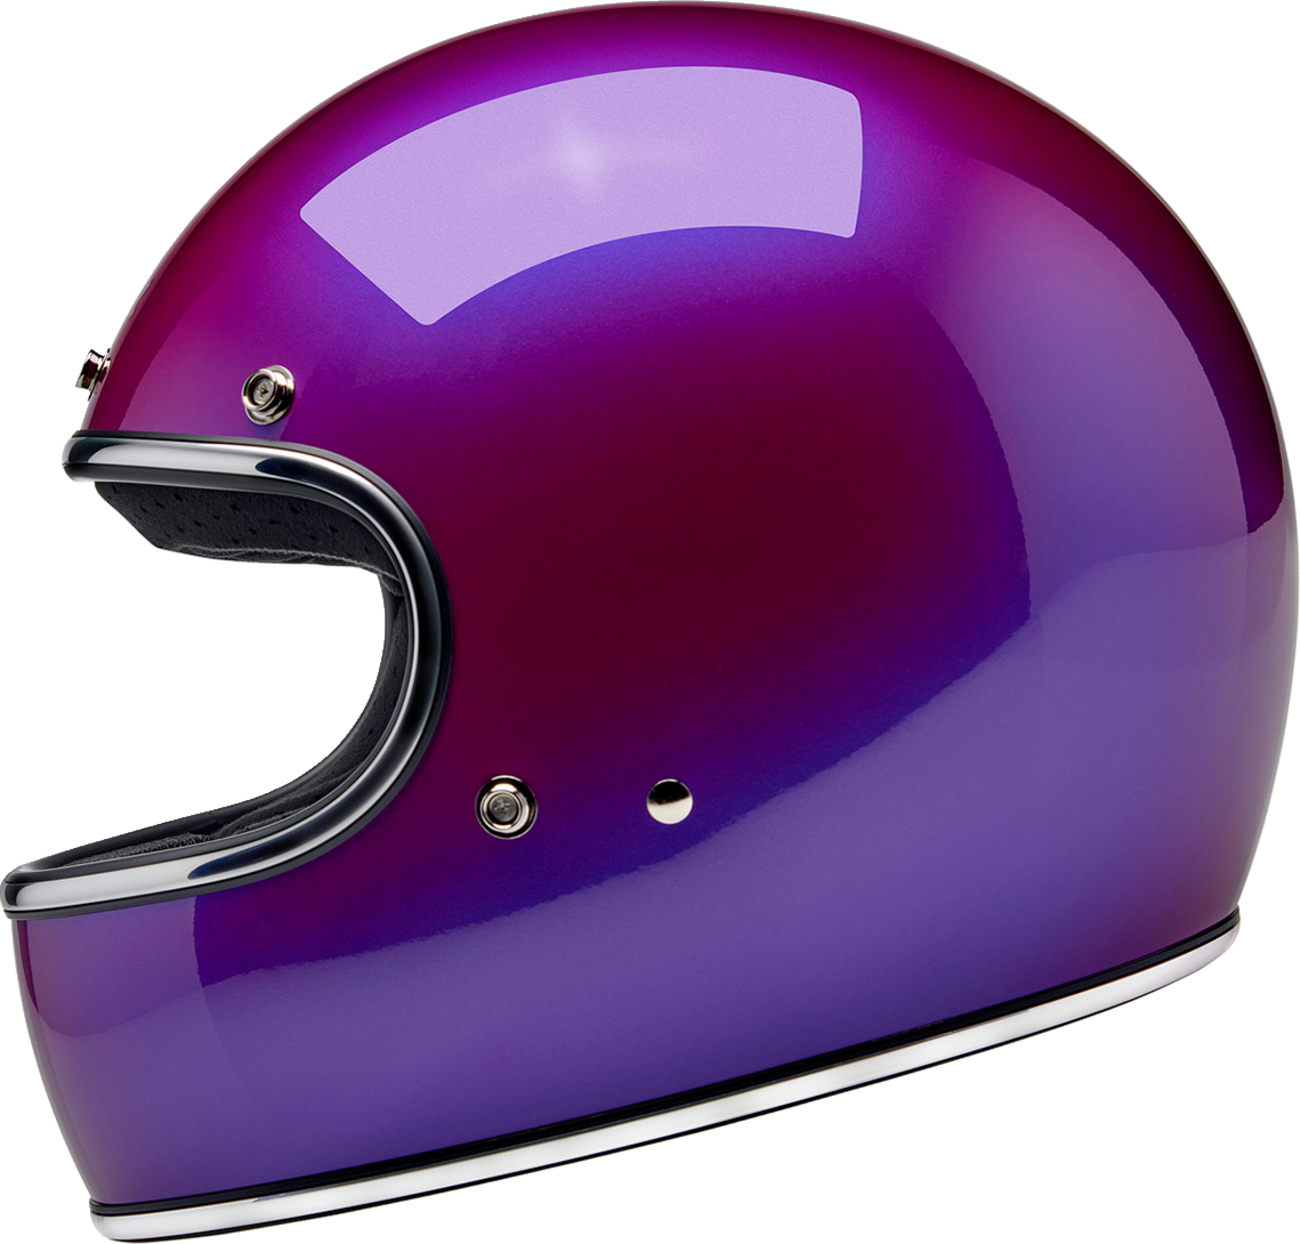 BILTWELL Gringo Helmet - Metallic Grape - Small 1002-339-502